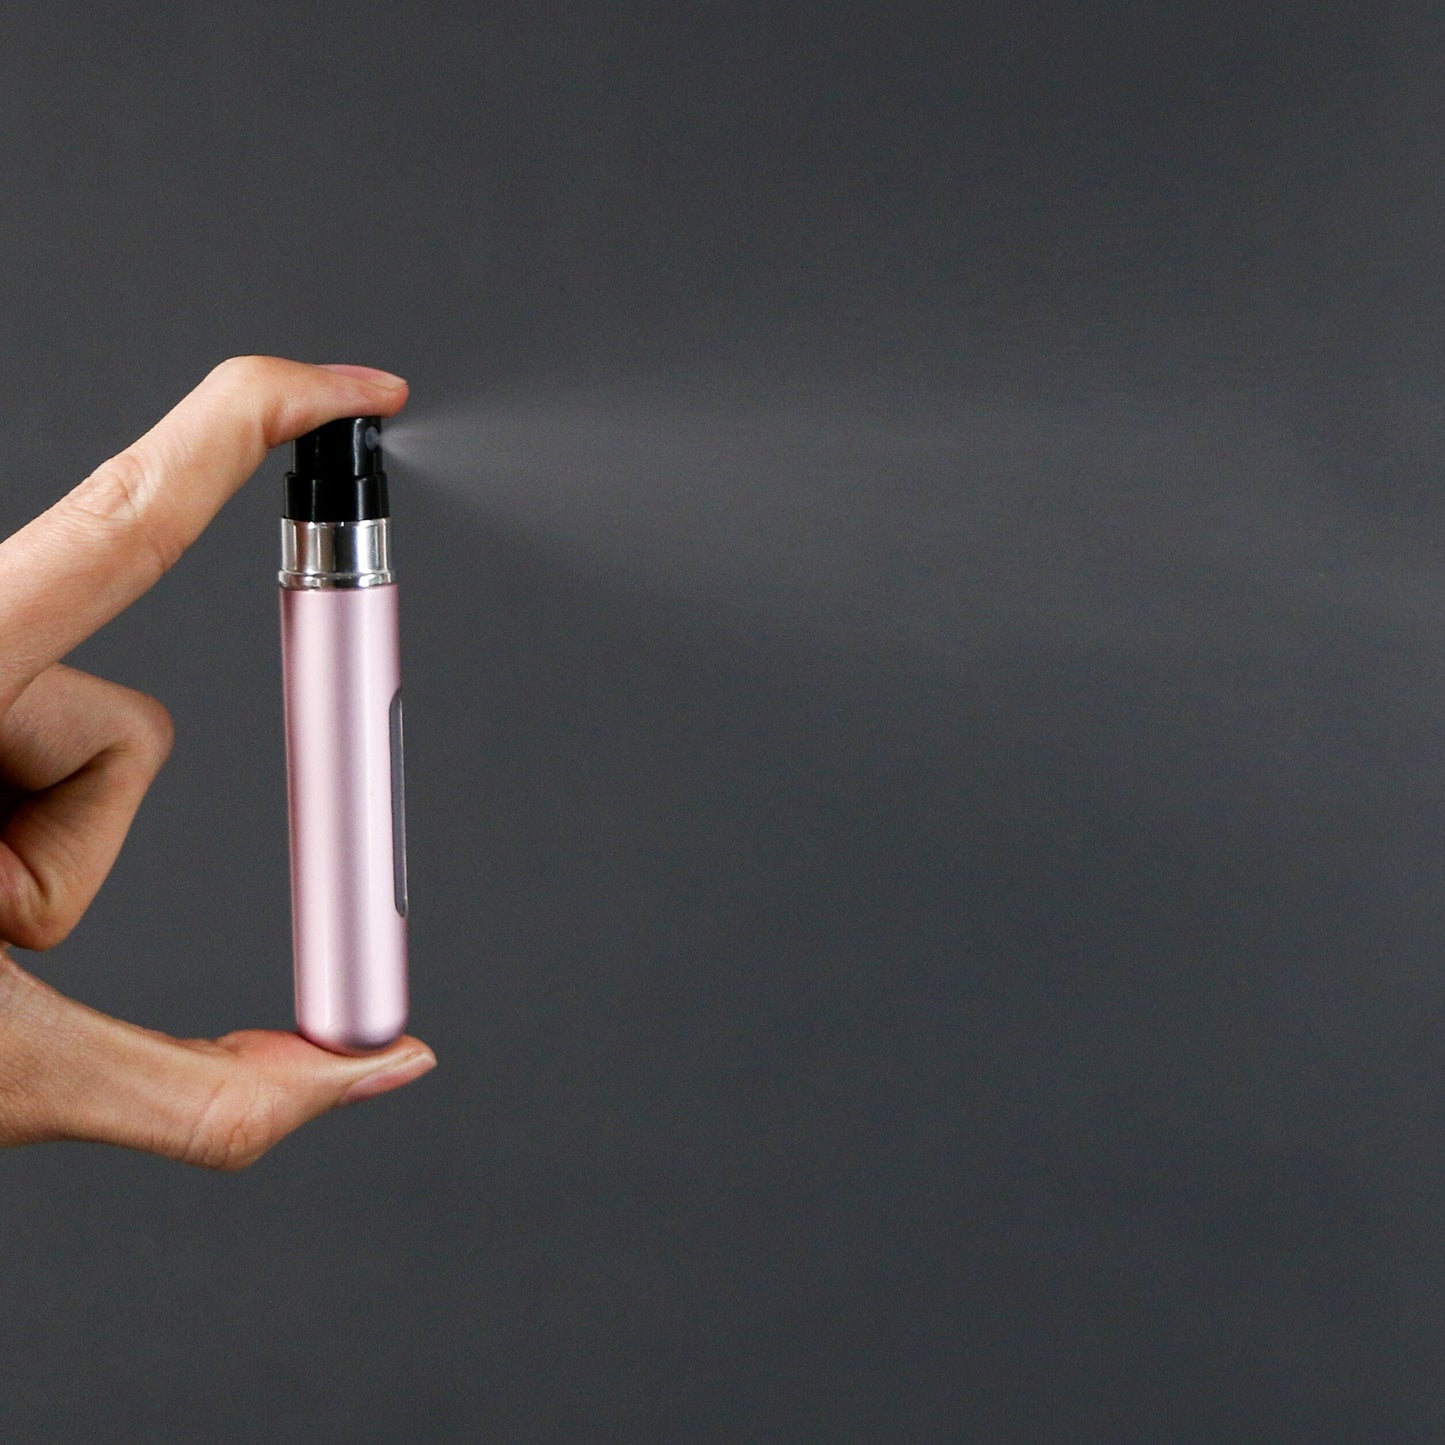 Portable Mini Refillable Perfume Bottle With Spray.